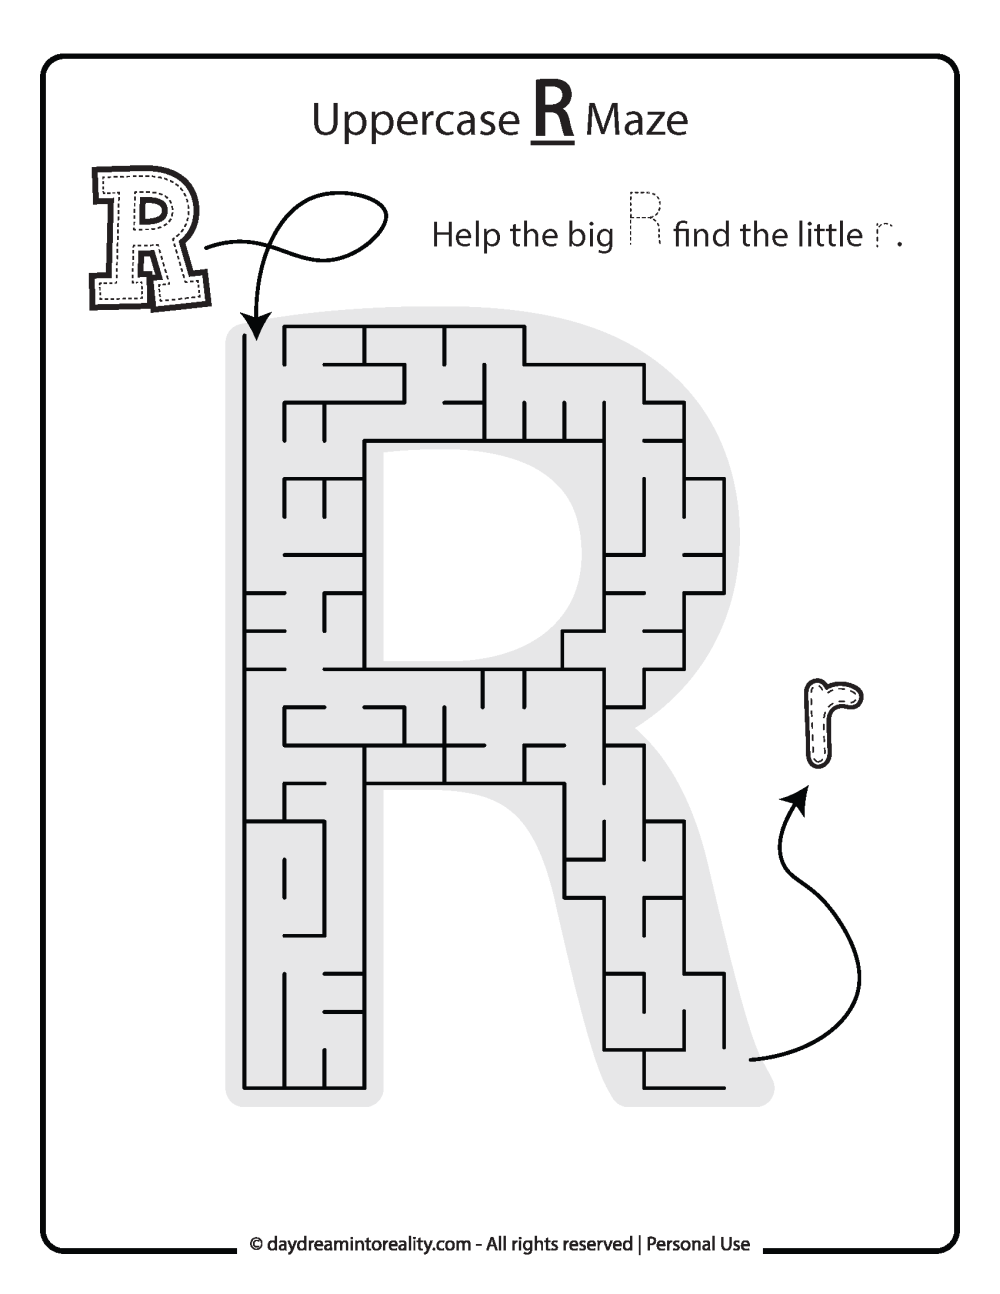 Uppercase "R" Maze Free Printable